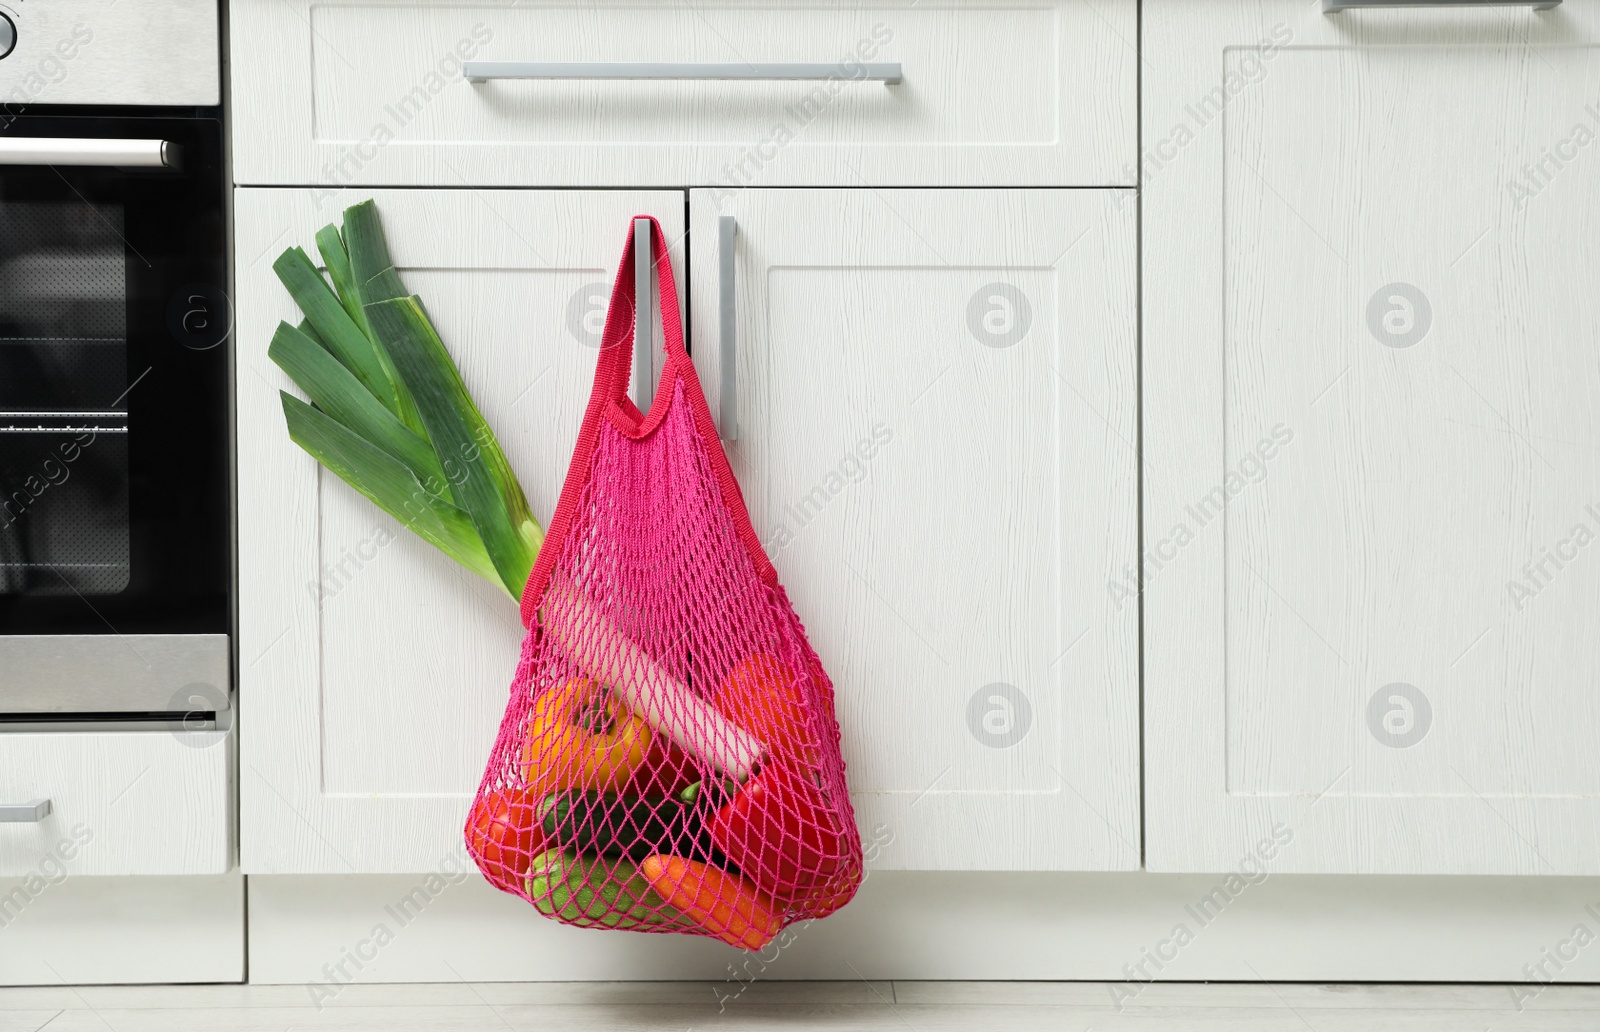 Photo of Net bag with vegetables hanging on cabinet door in kitchen